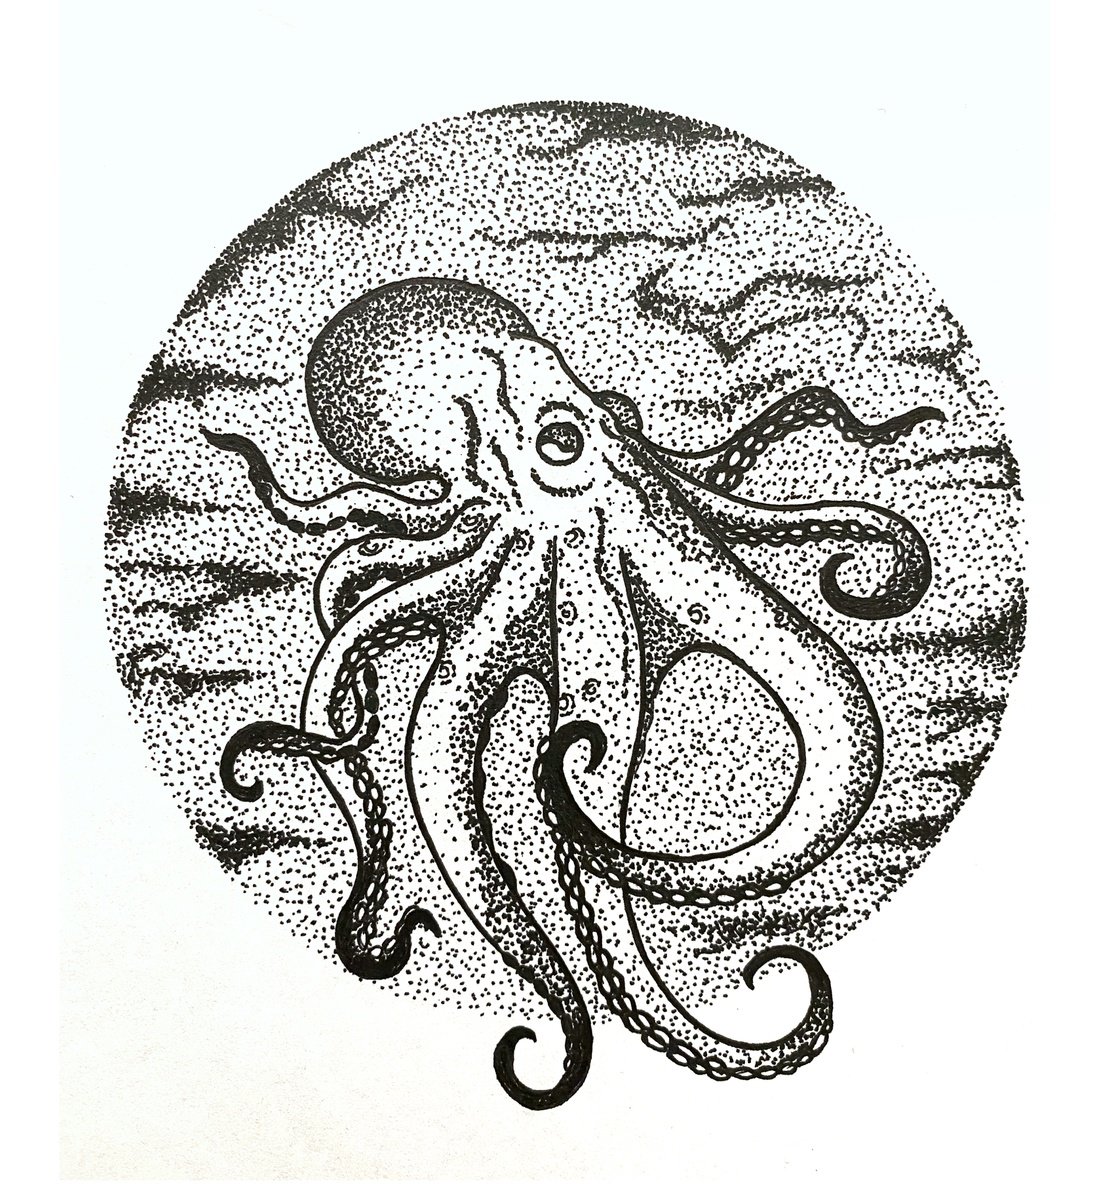 Octopus by Tina Shyfruk